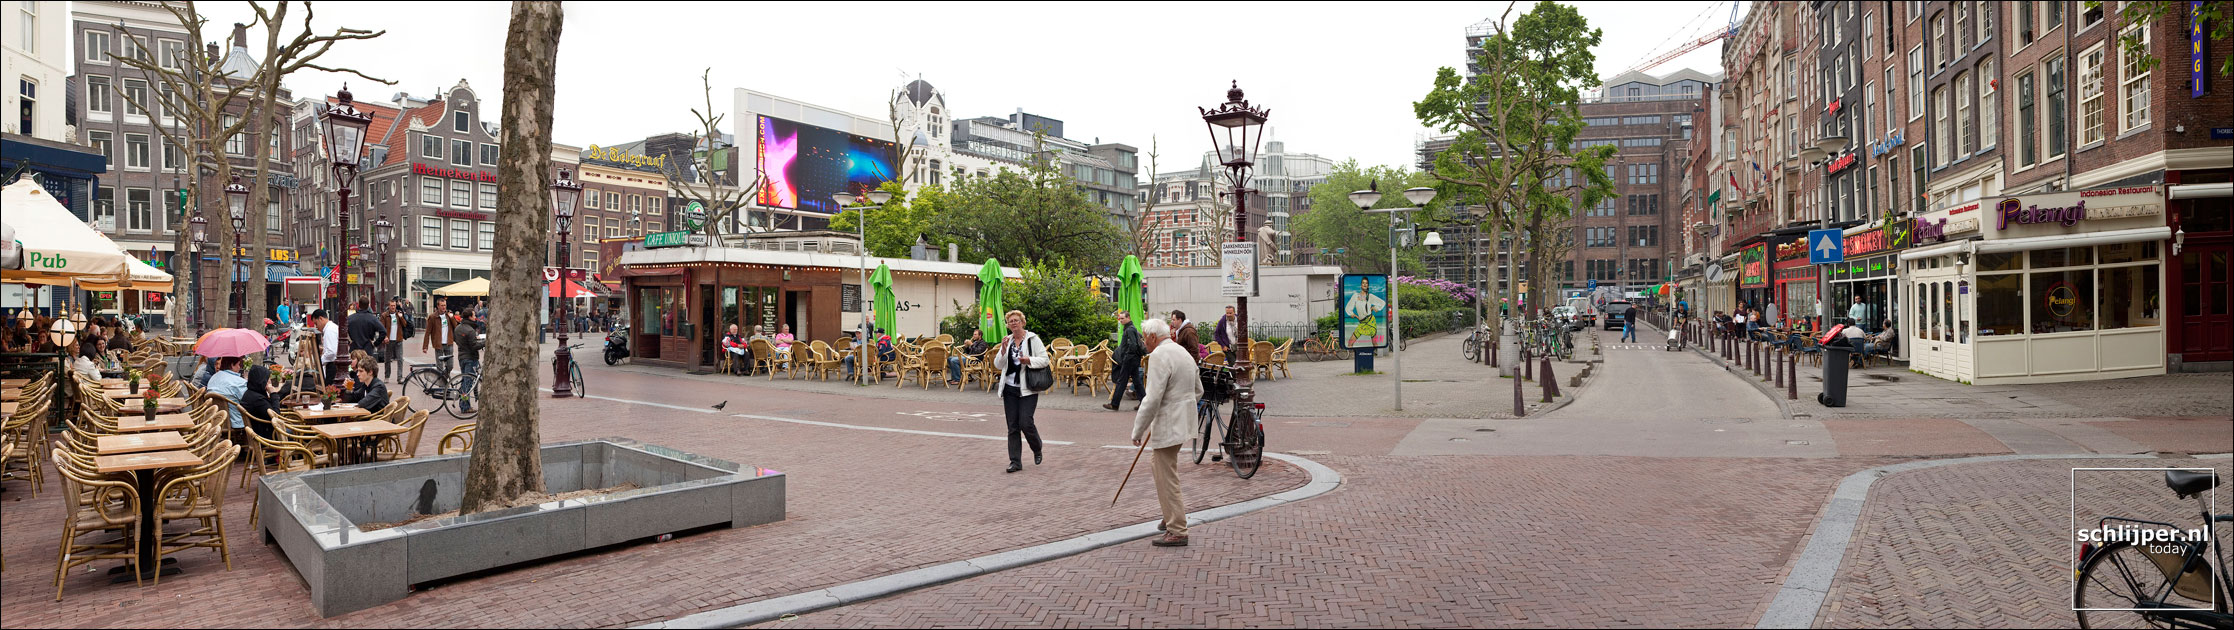 Nederland, Amsterdam, 15 mei 2009